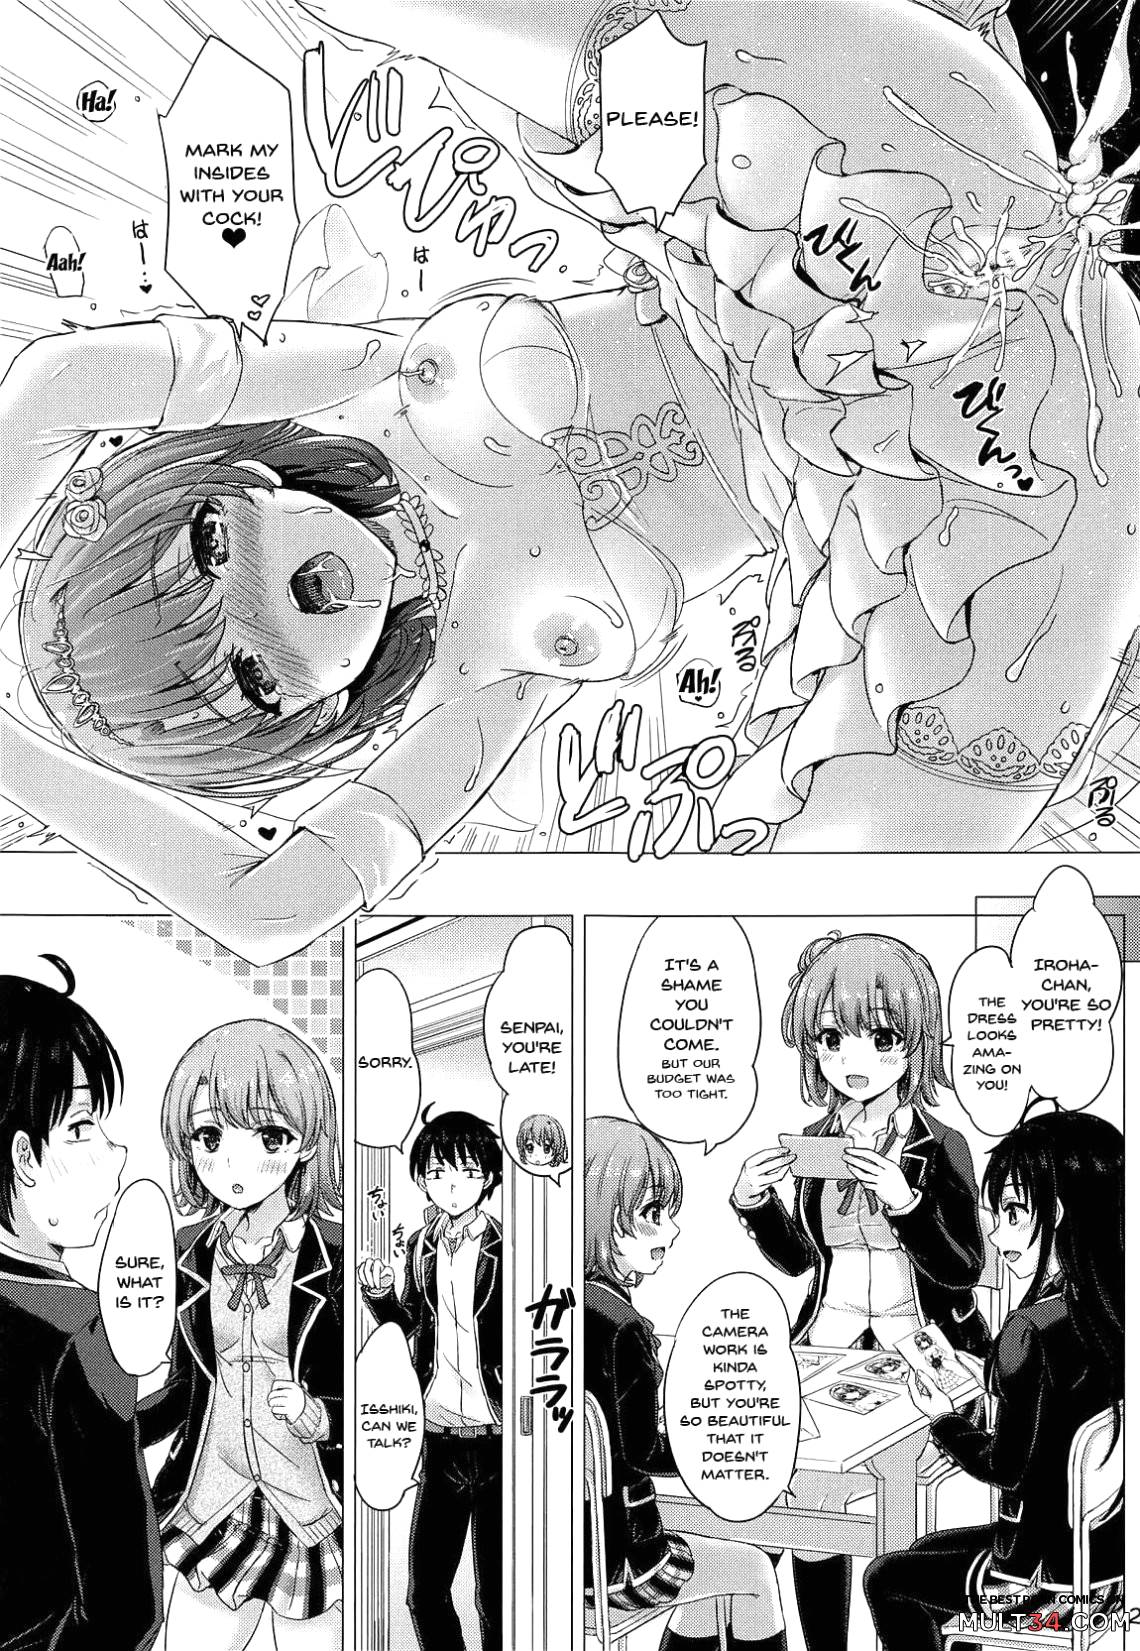 Wedding Irohasu! - Iroha's gonna marry you after today's scholl! page 20